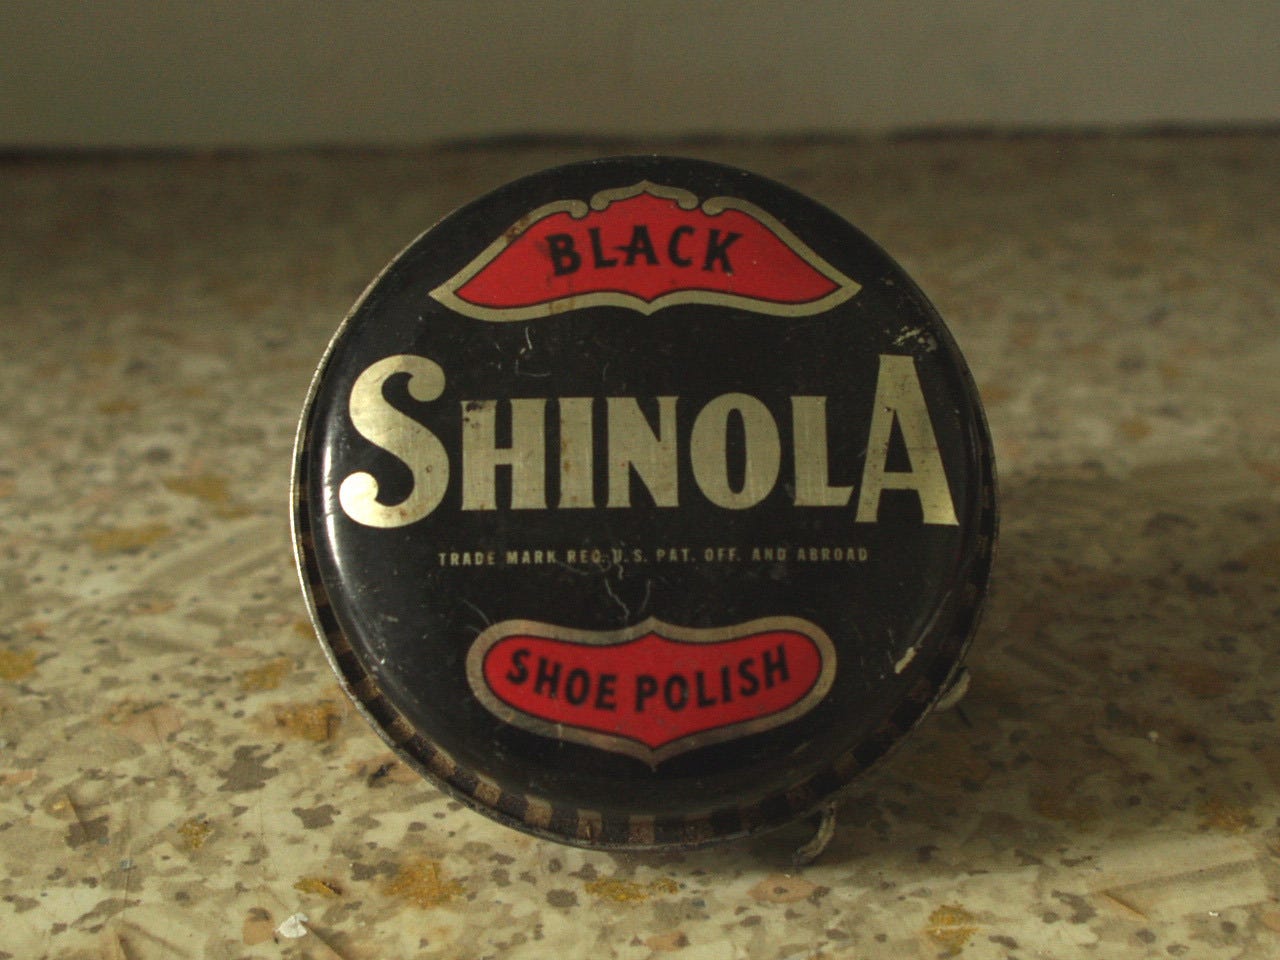 A can of Shinola